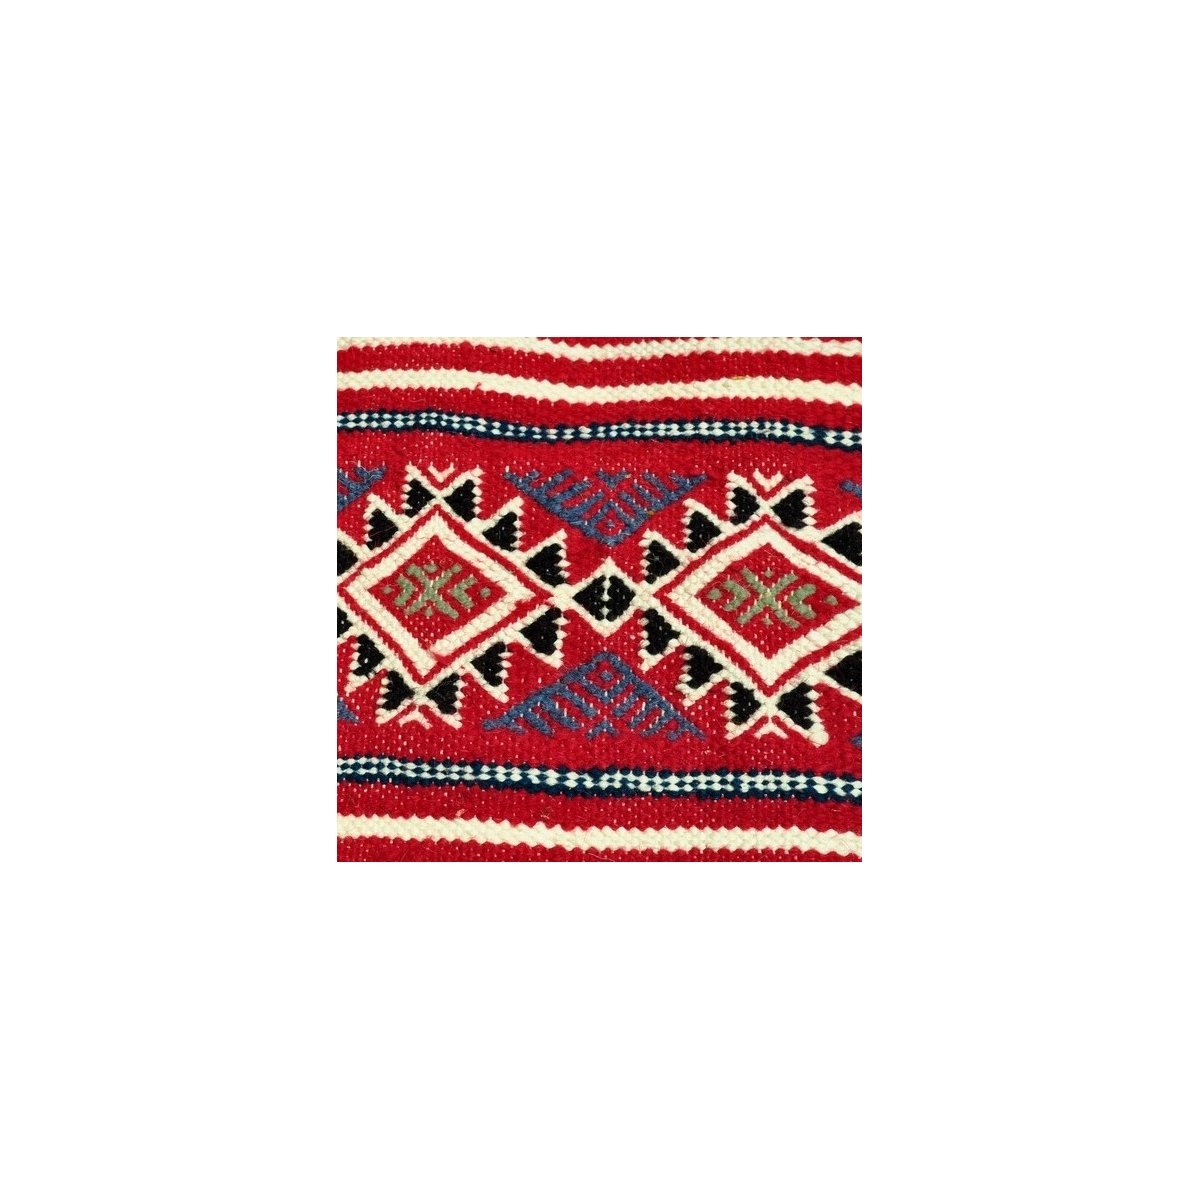 Berber tapijt Groot Tapijt Kilim Mahres 110x200 Rood (Handgeweven, Wol, Tunesië) Tunesisch kilimdeken, Marokkaanse stijl. Rechth